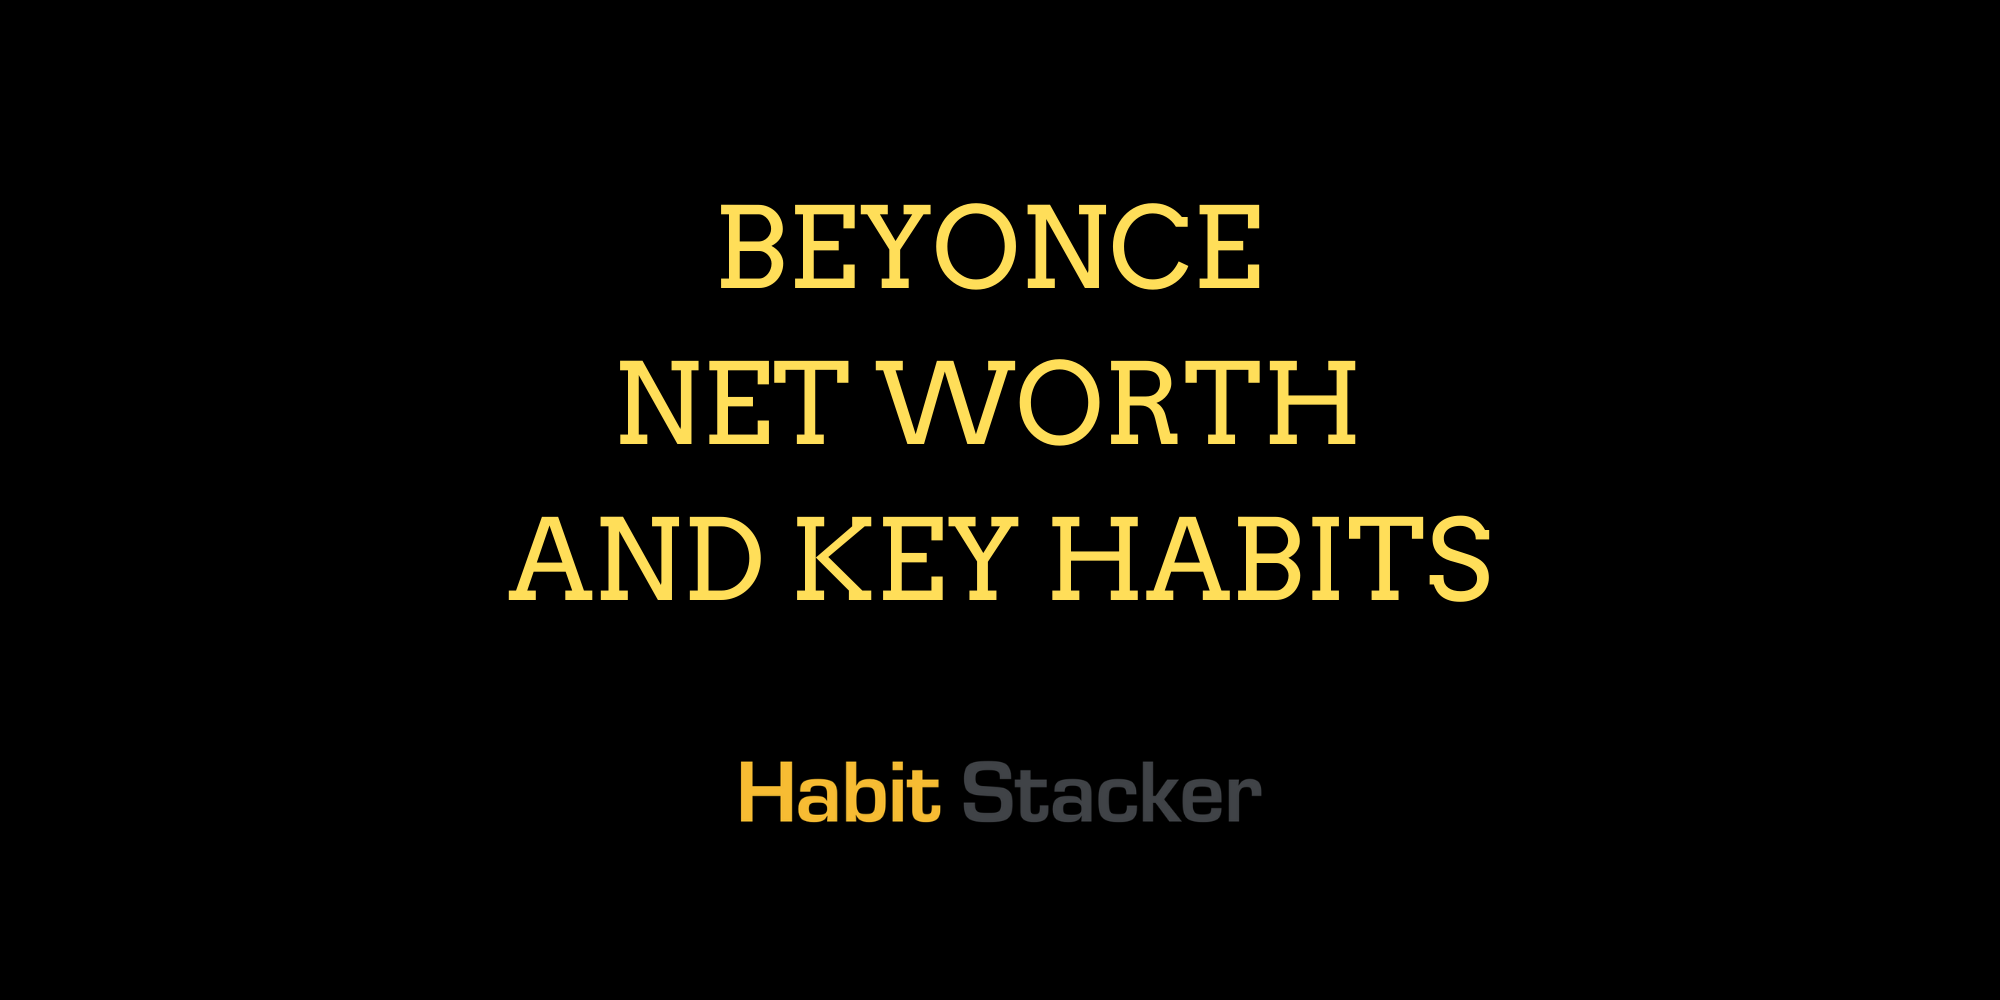 Beyonce Net Worth and Key Habits